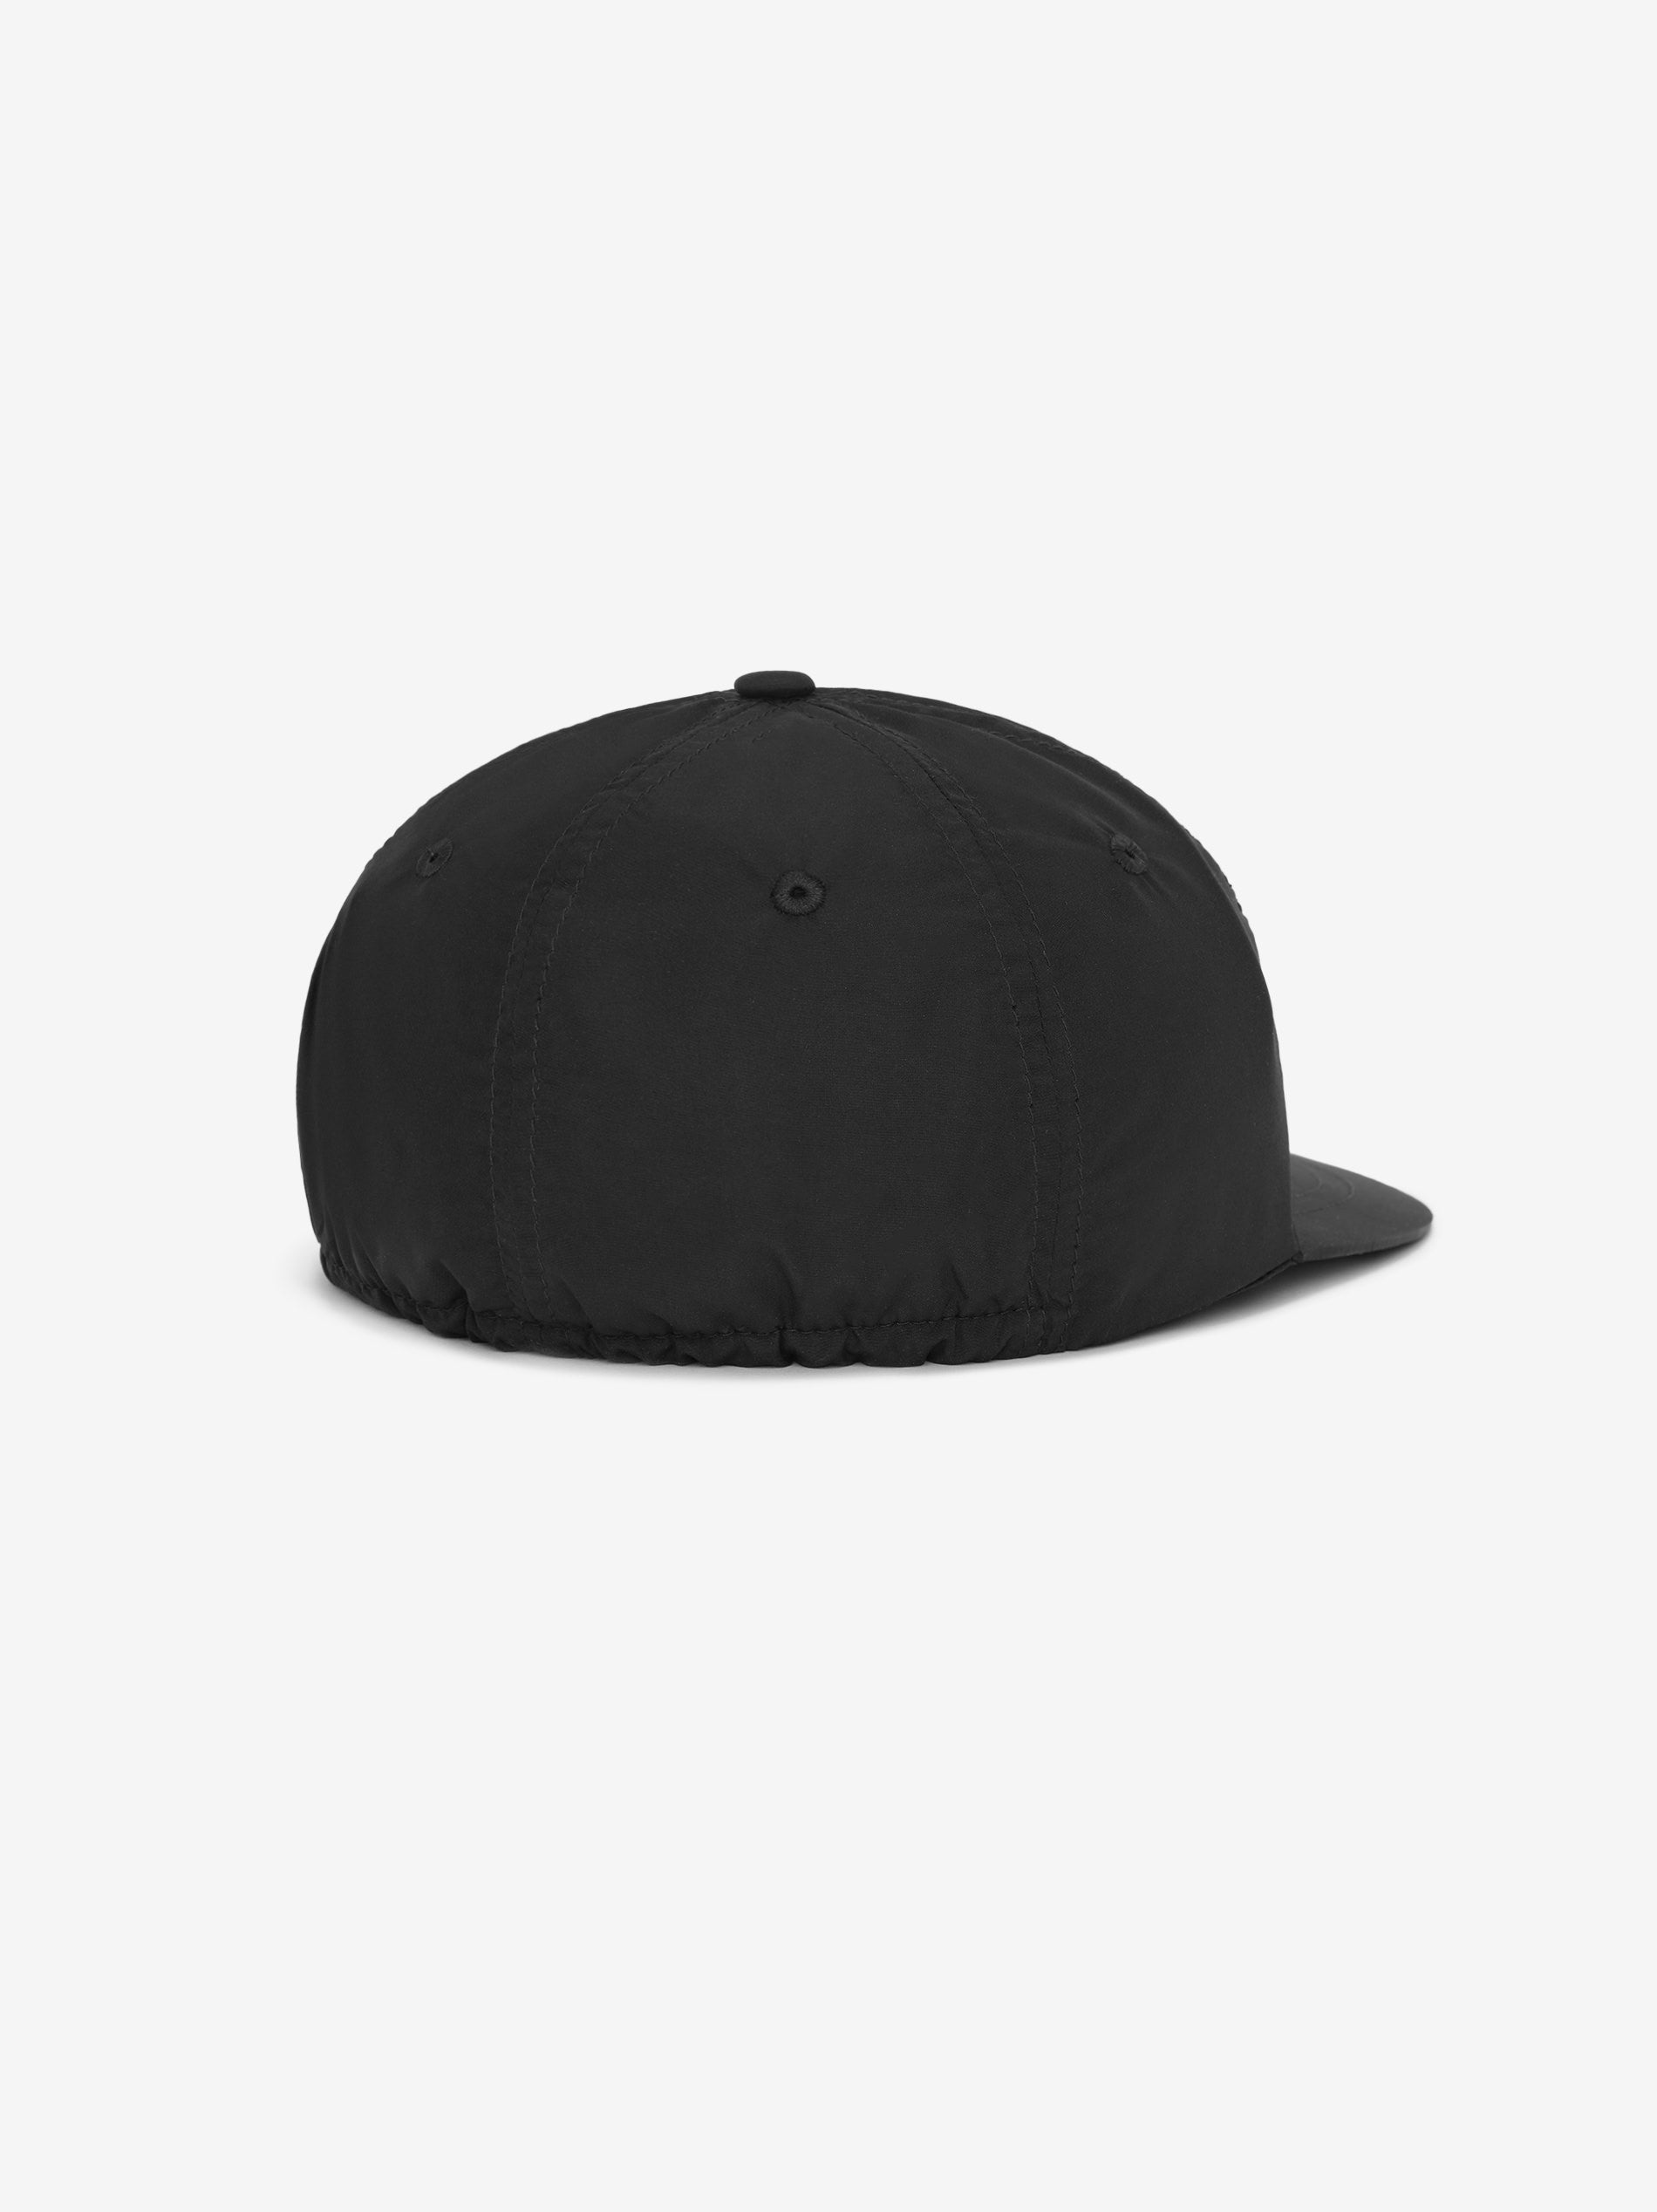 Abu Garcia Baseball Cap Black Comfortable Hat With Logo, 46% OFF